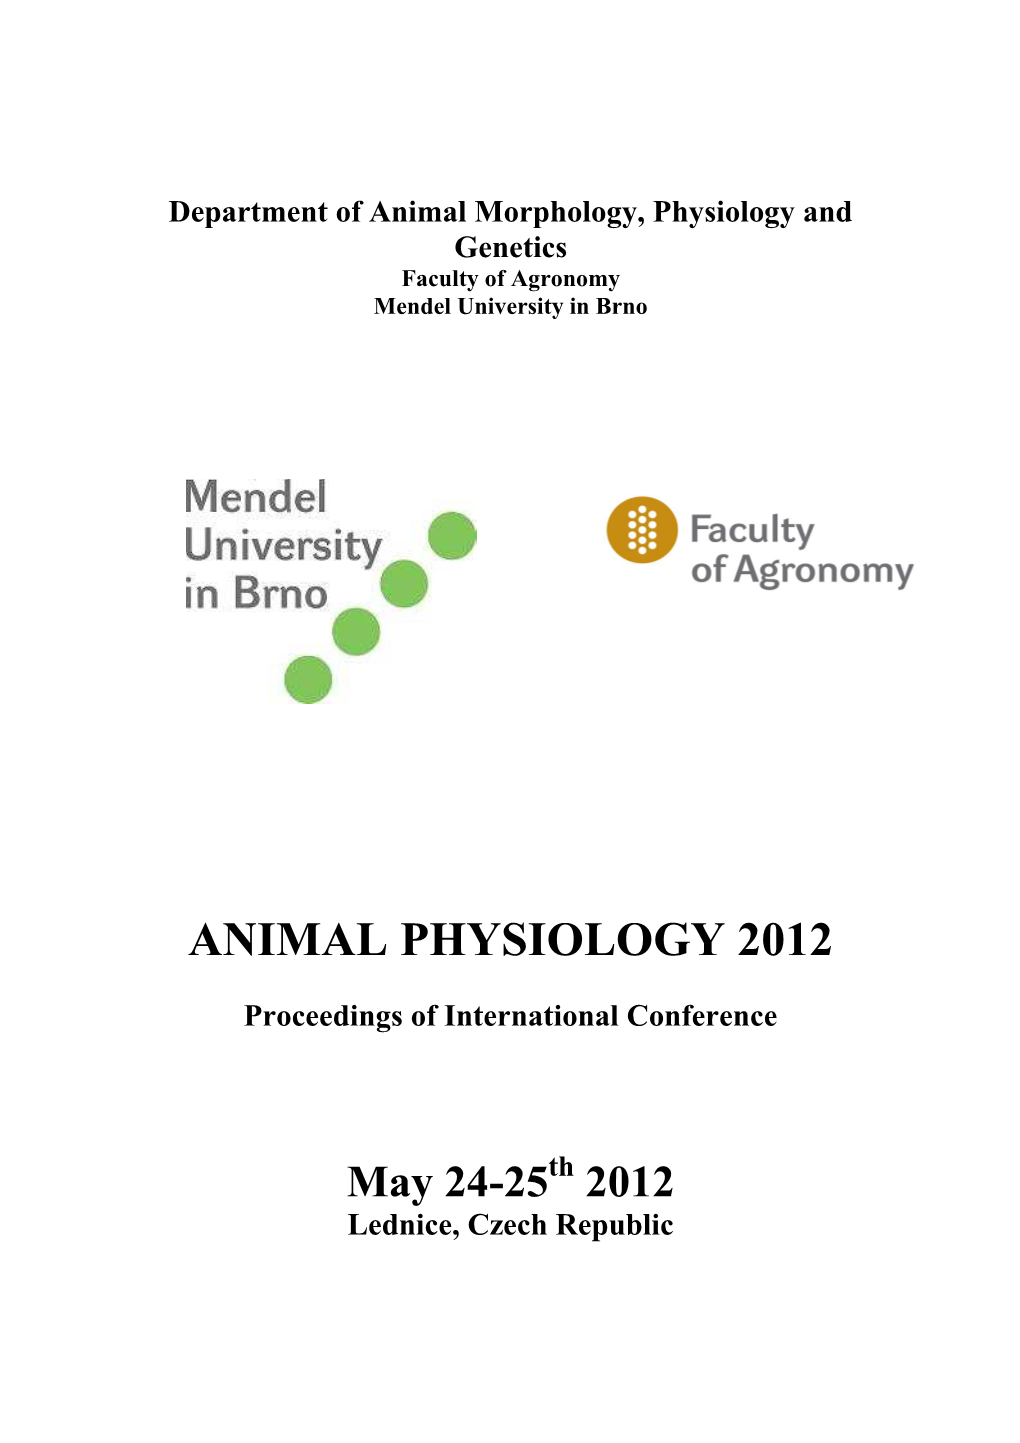 Animal Physiology 2012 Proceedings